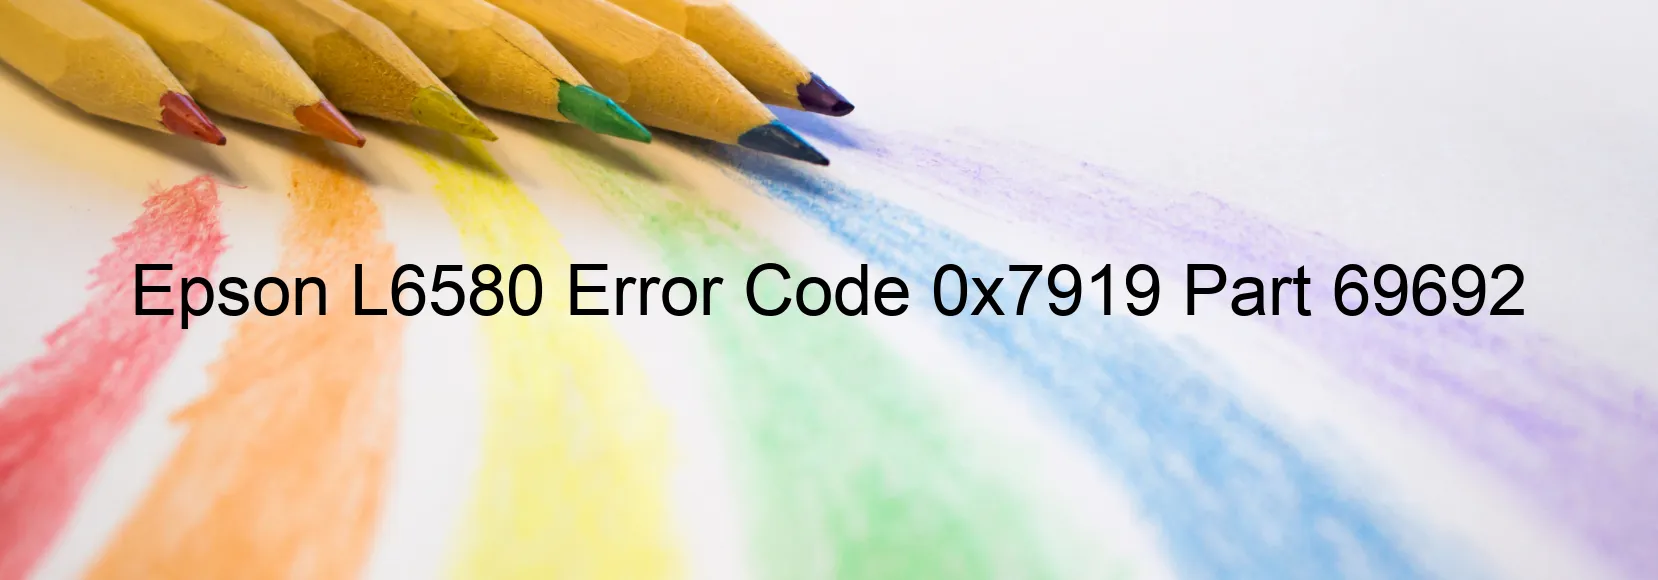 Epson L6580 Error Code 0x7919 Part 69692